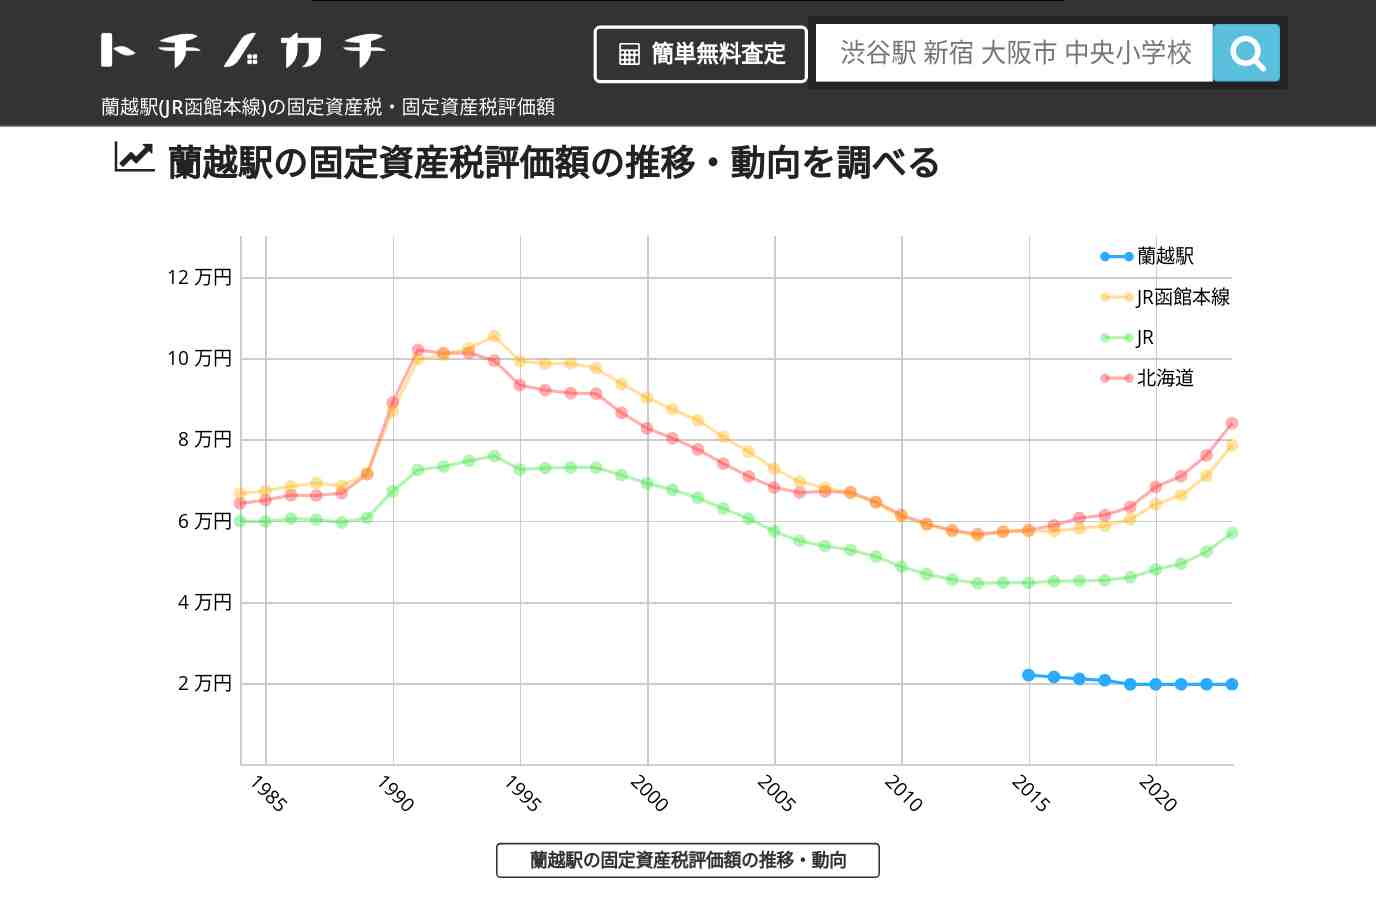 蘭越駅(JR函館本線)の固定資産税・固定資産税評価額 | トチノカチ